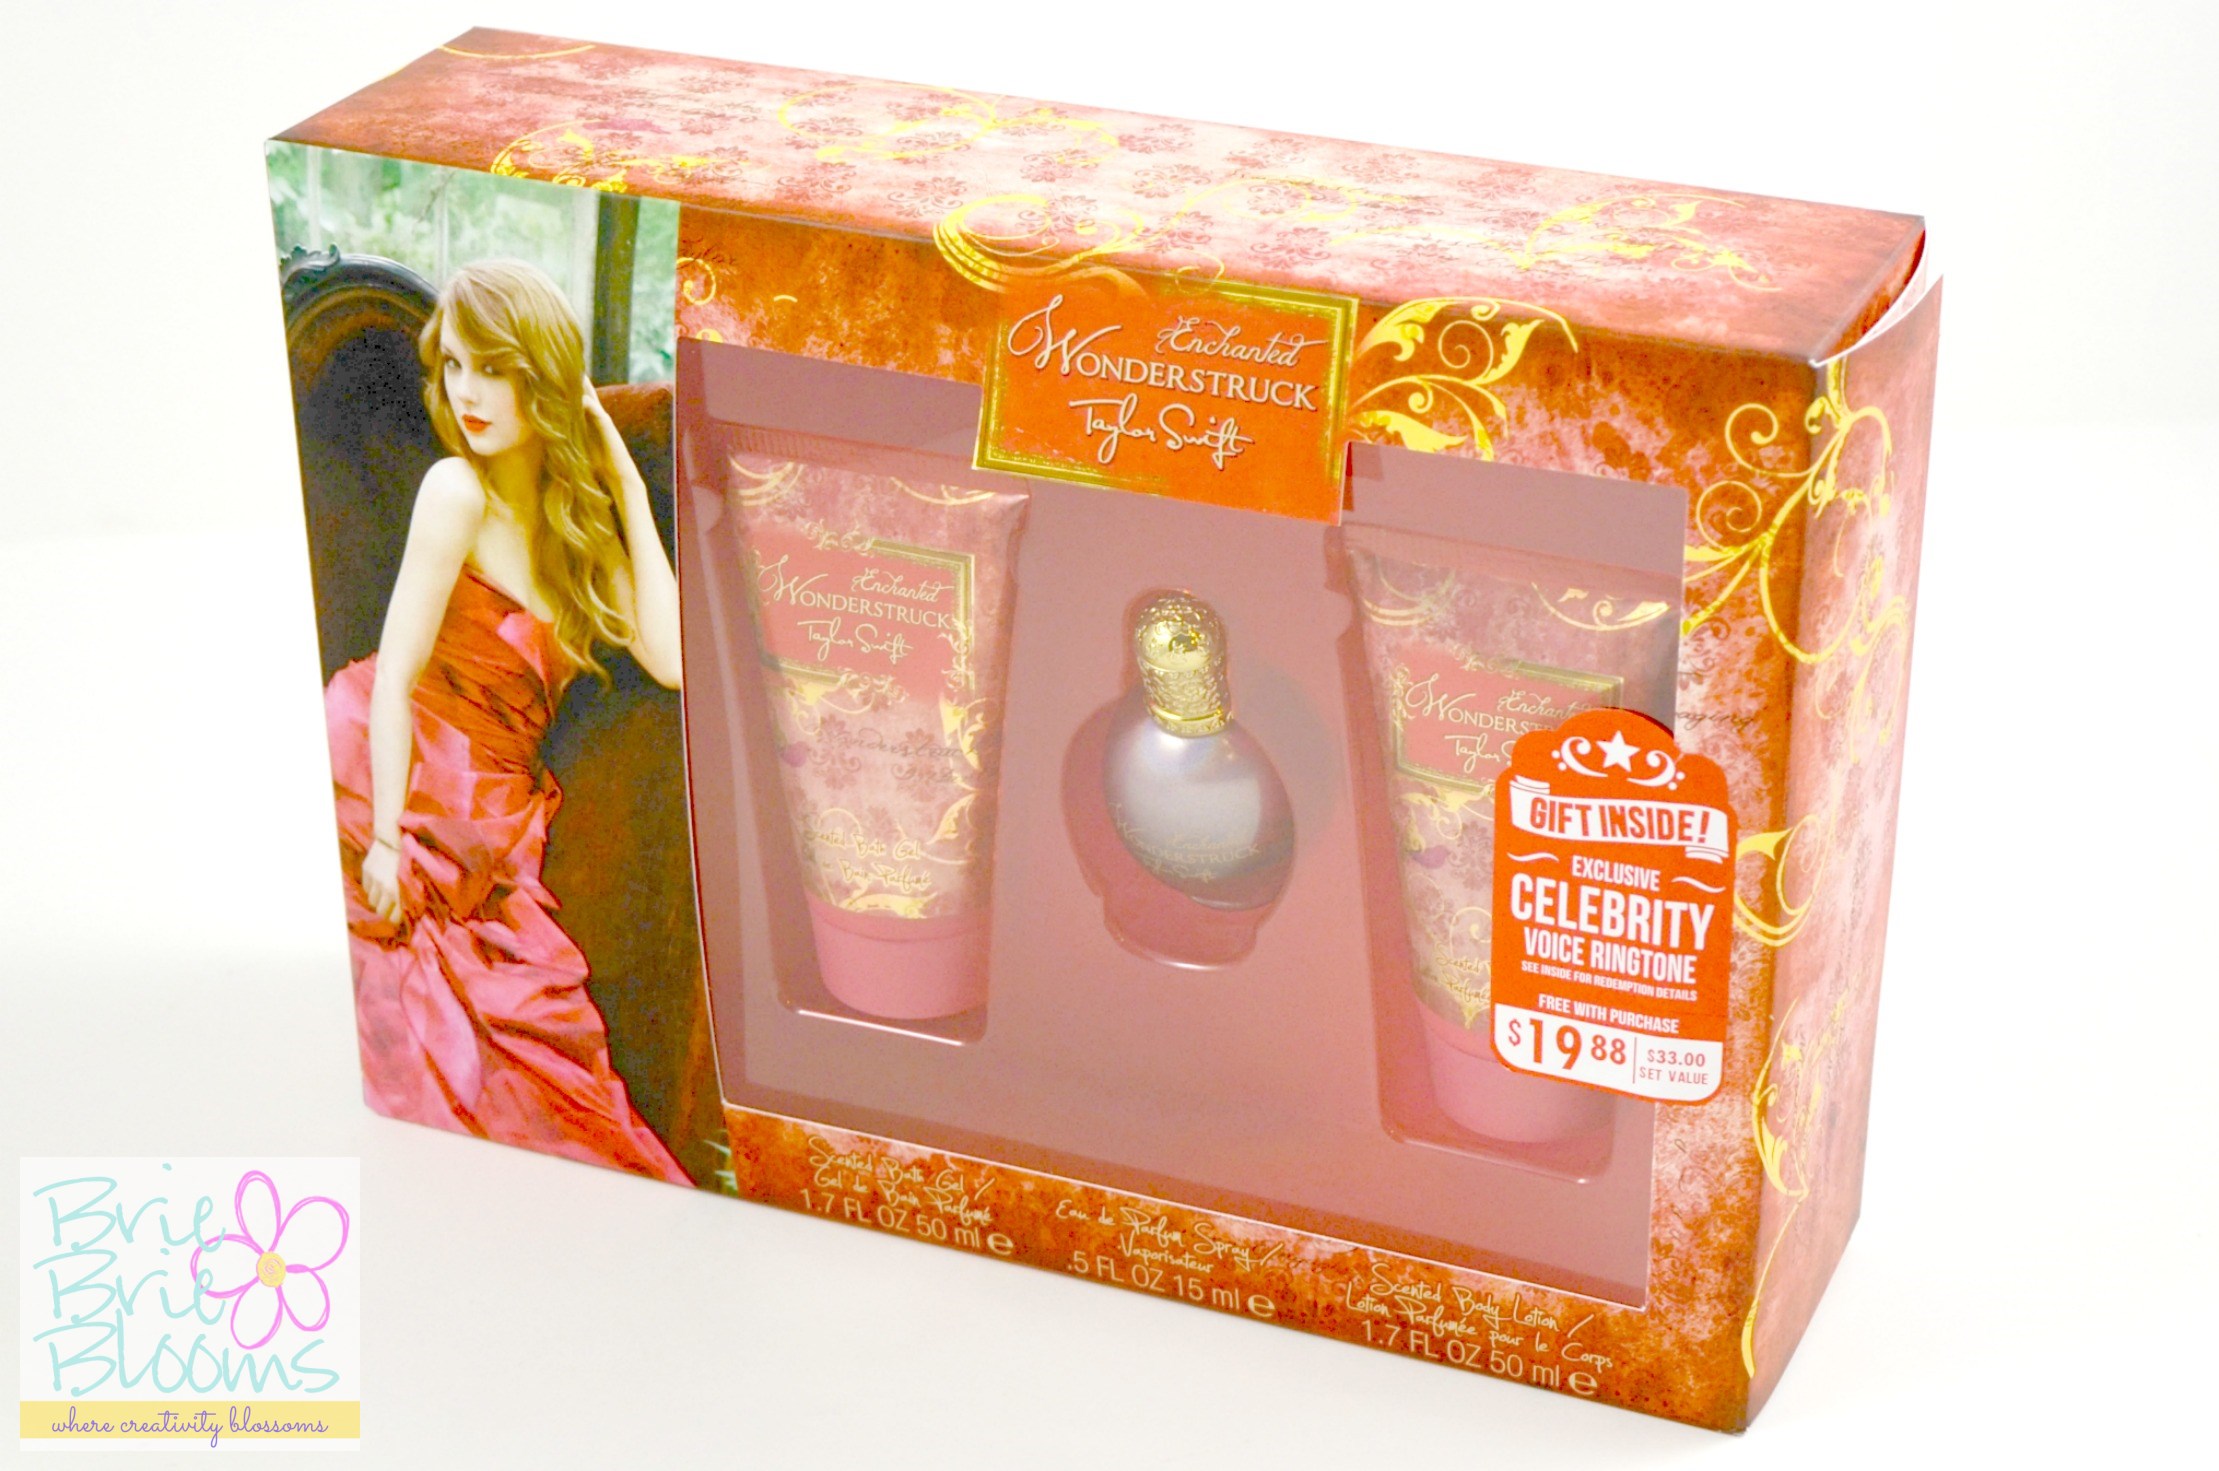 Wonderstruck Enchanted by Taylor Swift perfume gift set at Walmart #scentsavings #shop #cbias